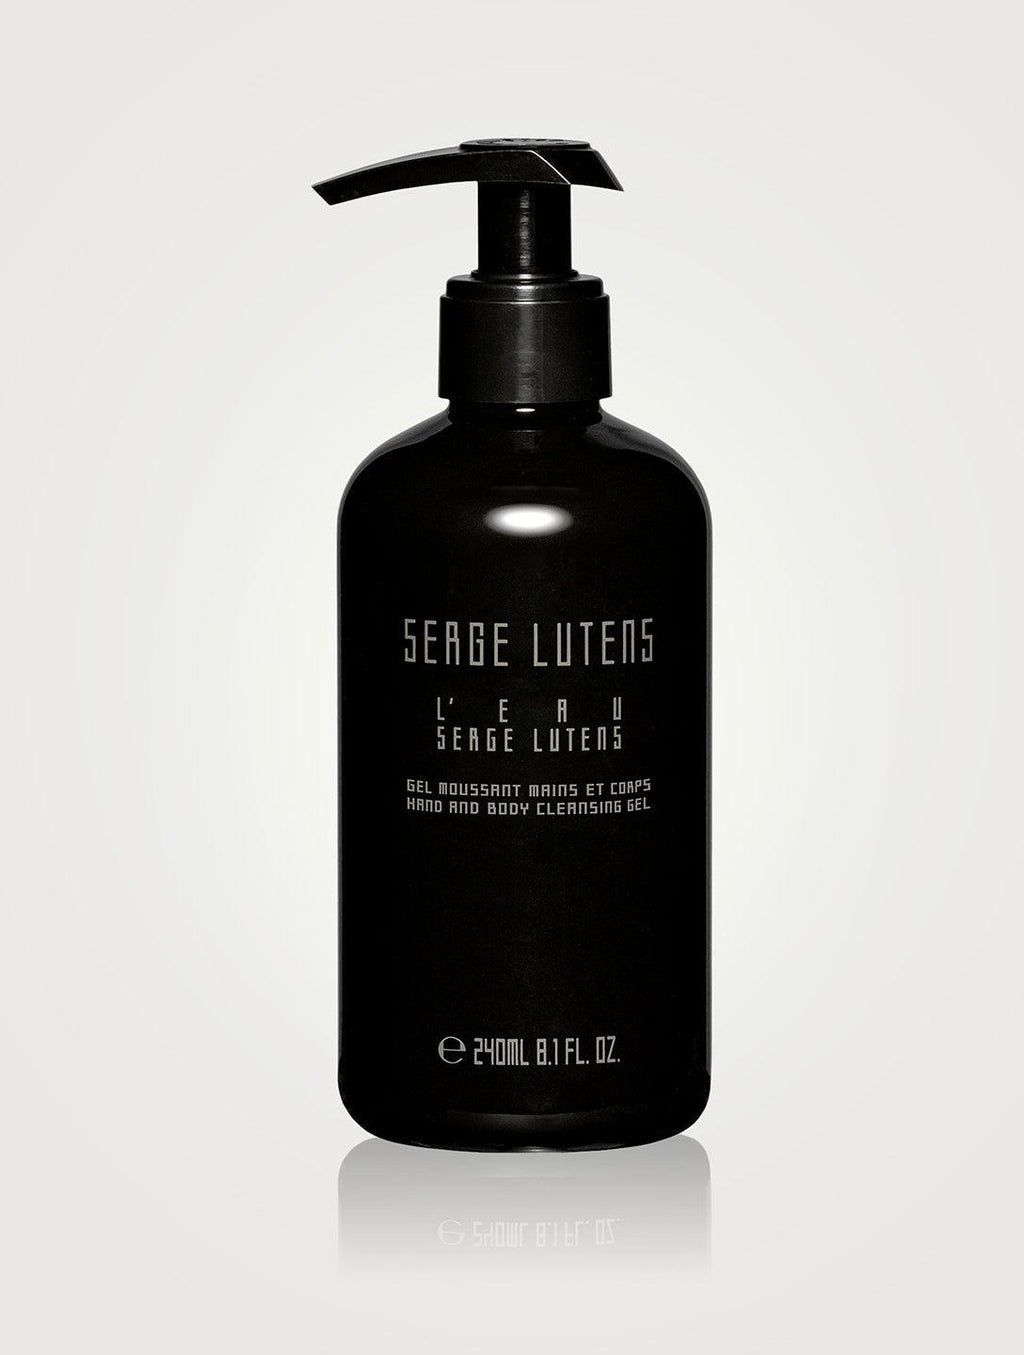 Serge lutens L'eau hand and body cleansing Gel. - Parfum Gallerie